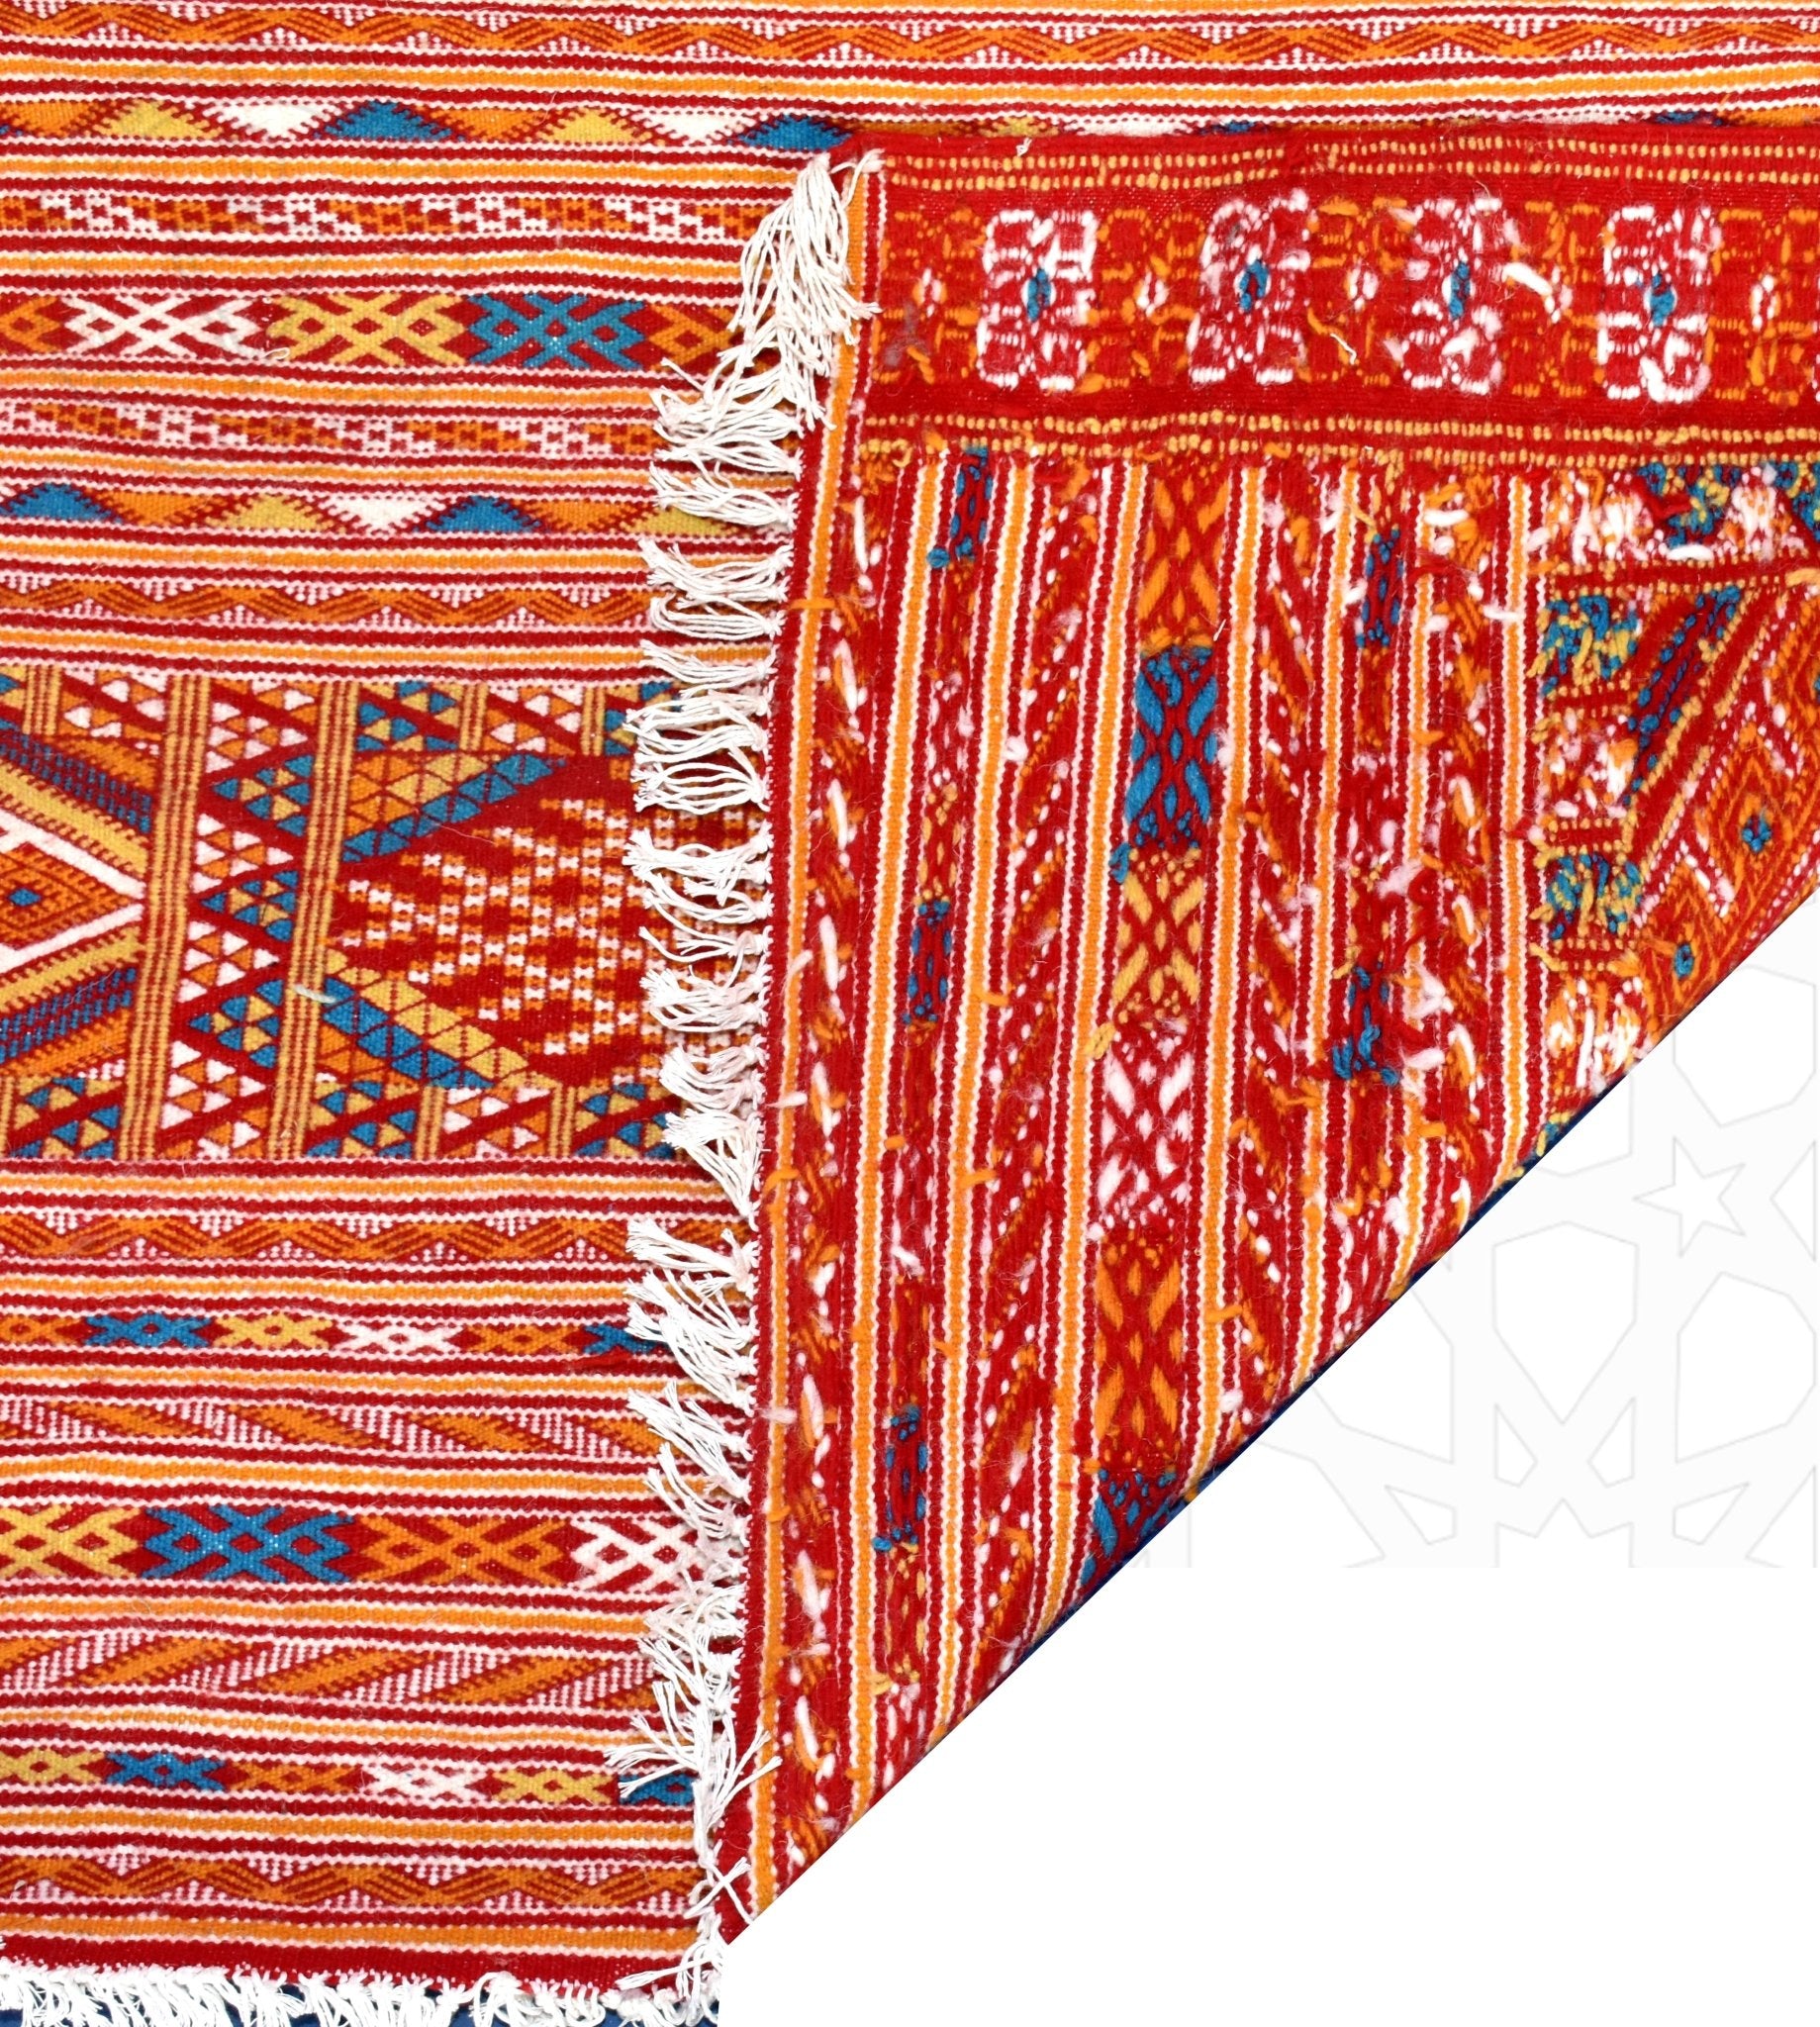 Flatweave kilim hanbal Moroccan rug - 4.76 x 6.24 ft / 145 x 190 cm - Berbers Market